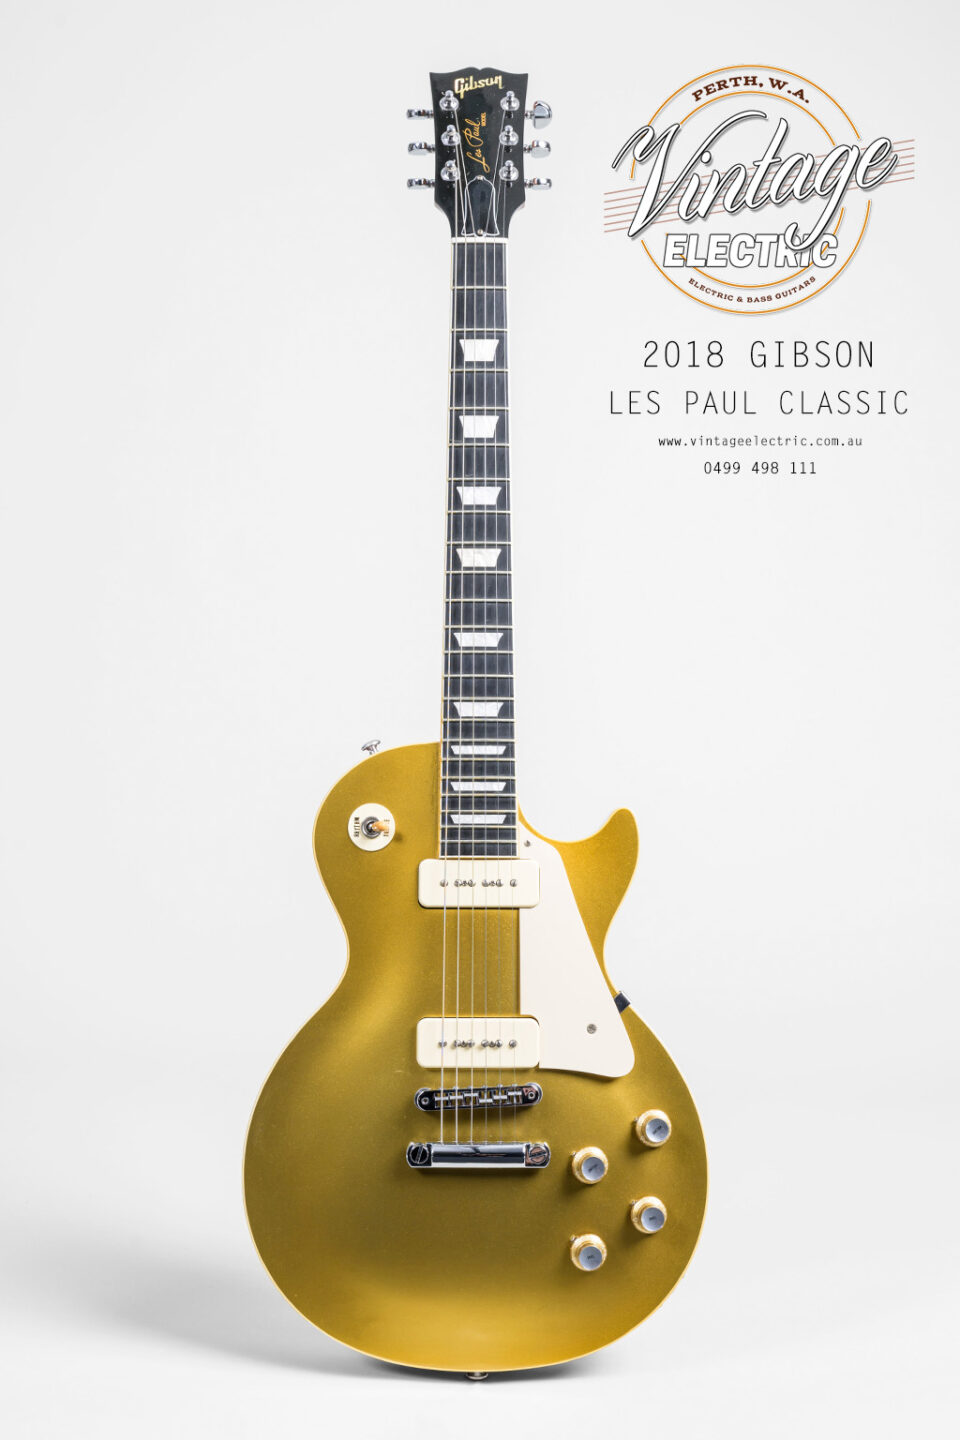 2018 Gibson Les Paul Classic